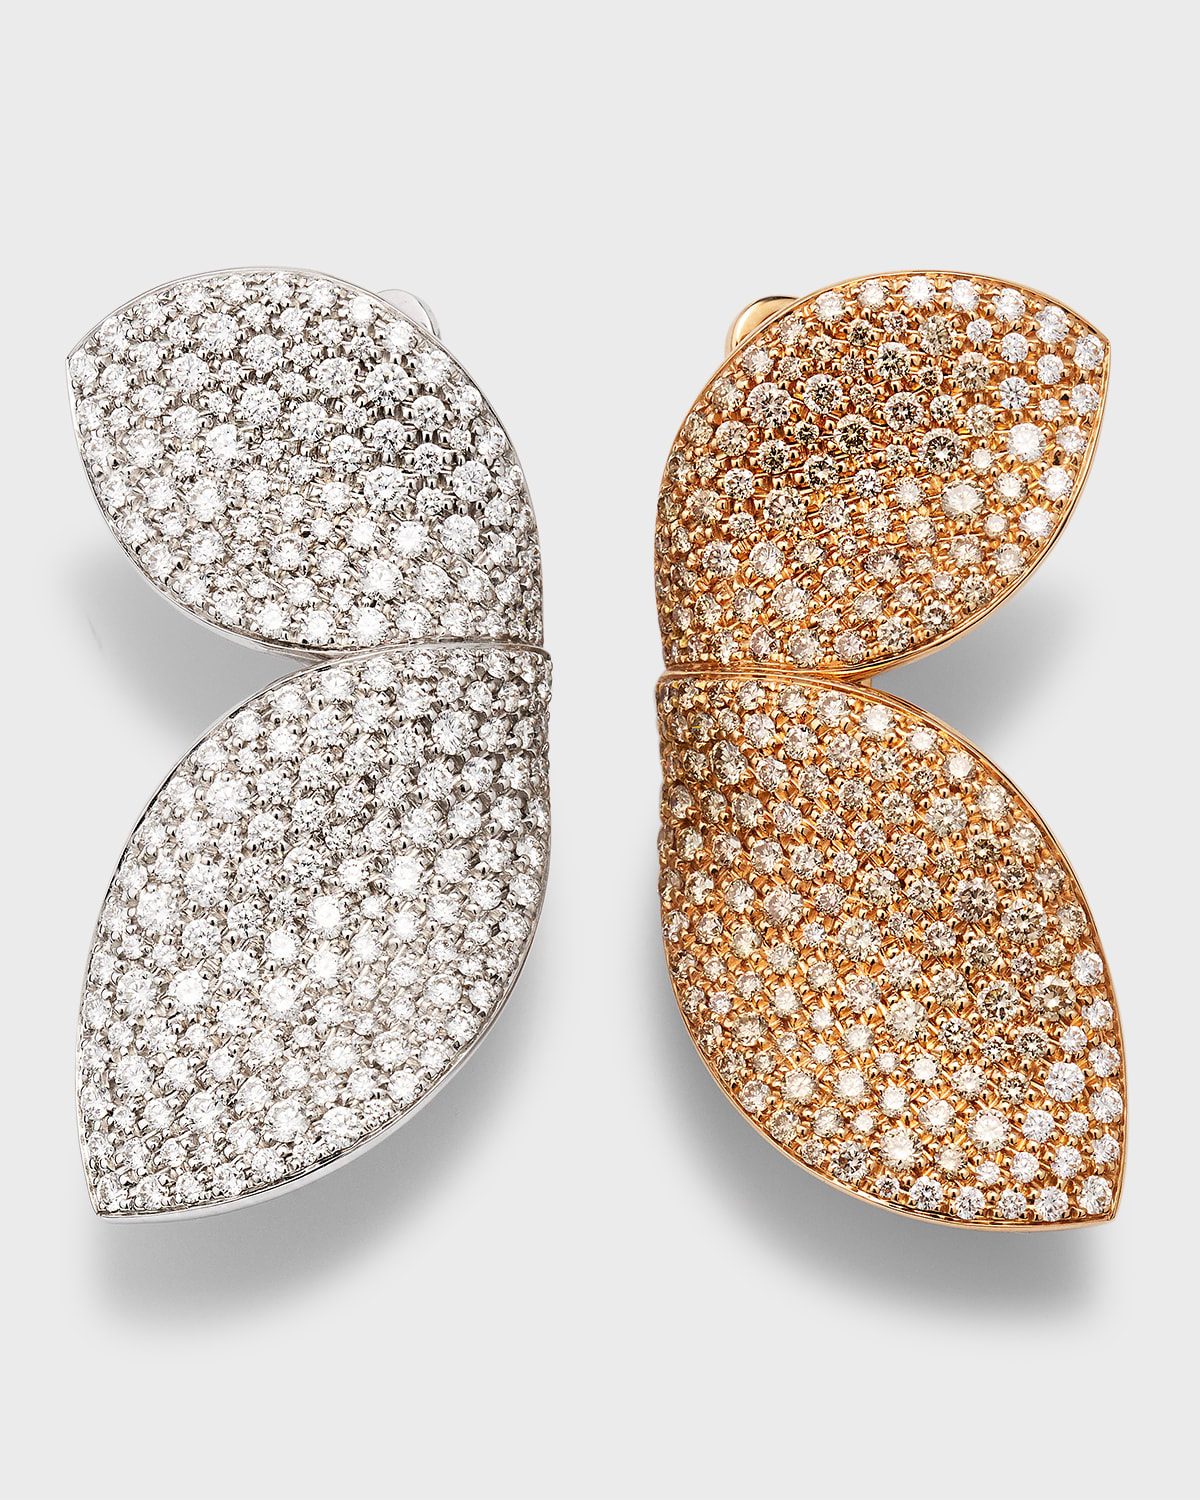 Pasquale Bruni Giardini Segreti 18k White Gold And Red Gold Diamond Earrings